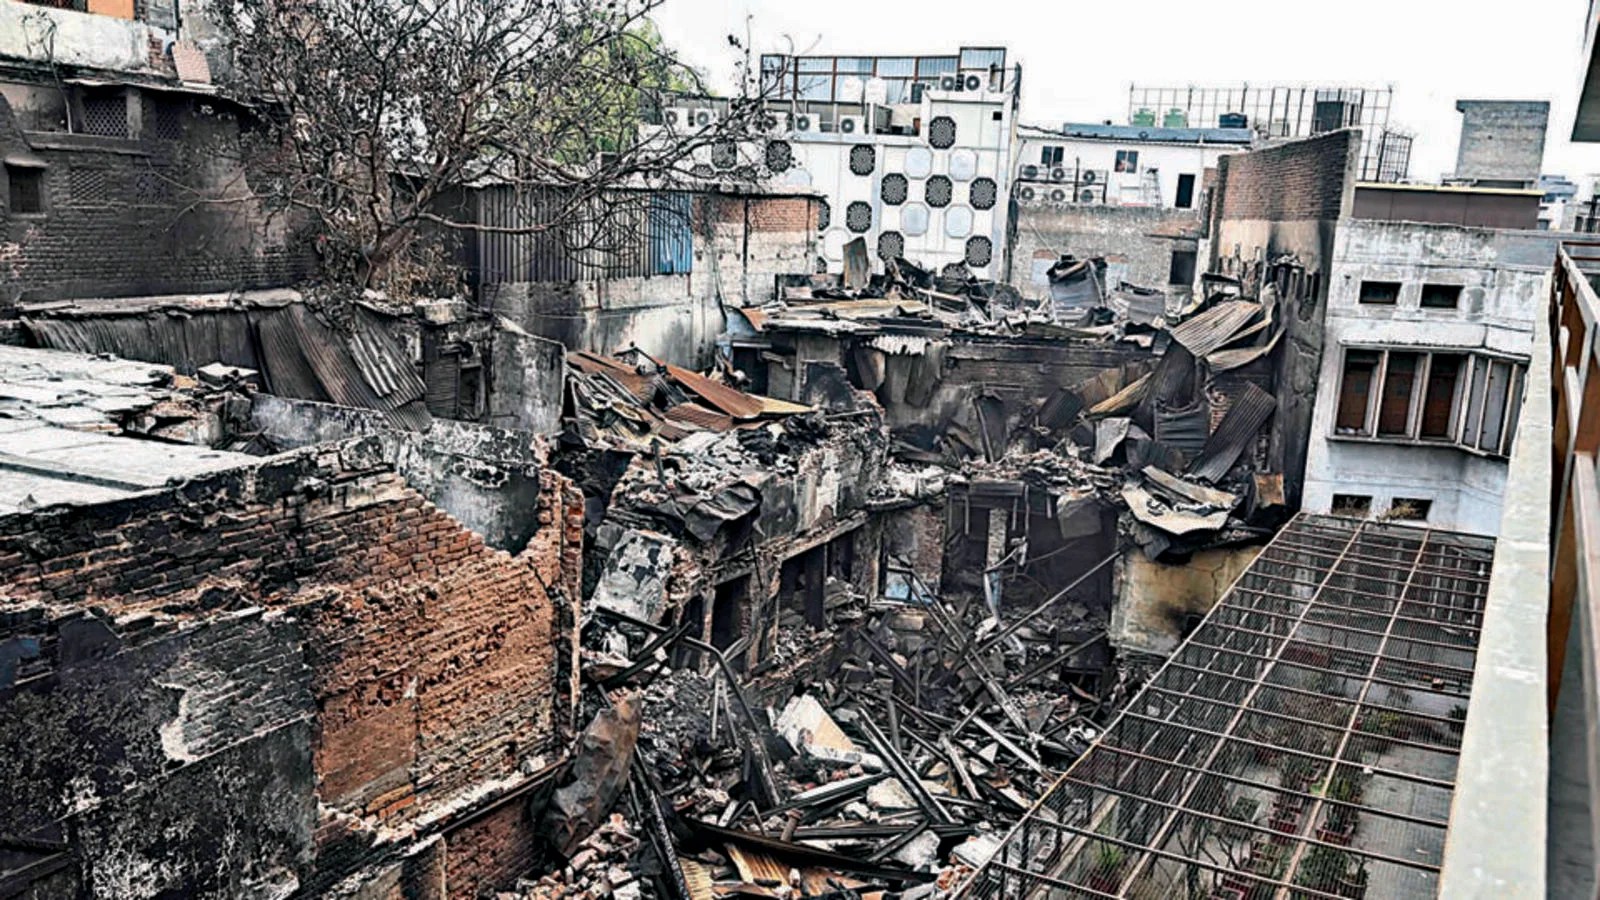 15 days after blaze, locals battle smoke in Chandni Chowk hub Mediainsights.in